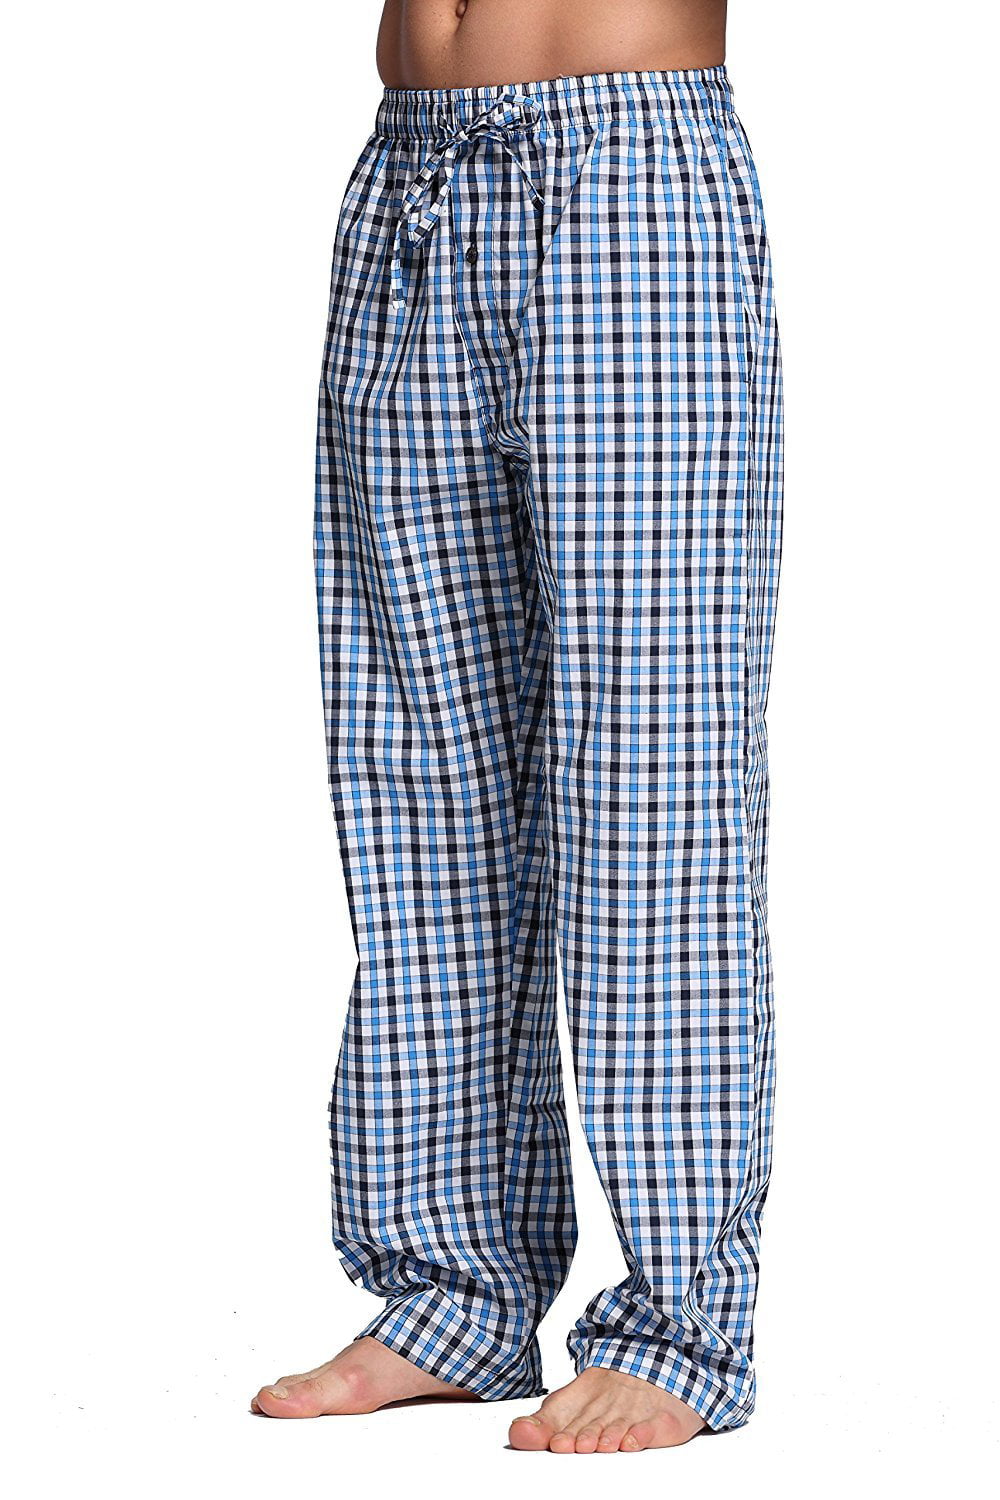 Details about   CYZ Men's 100% Cotton Poplin Pajama Lounge Sleep Pant 